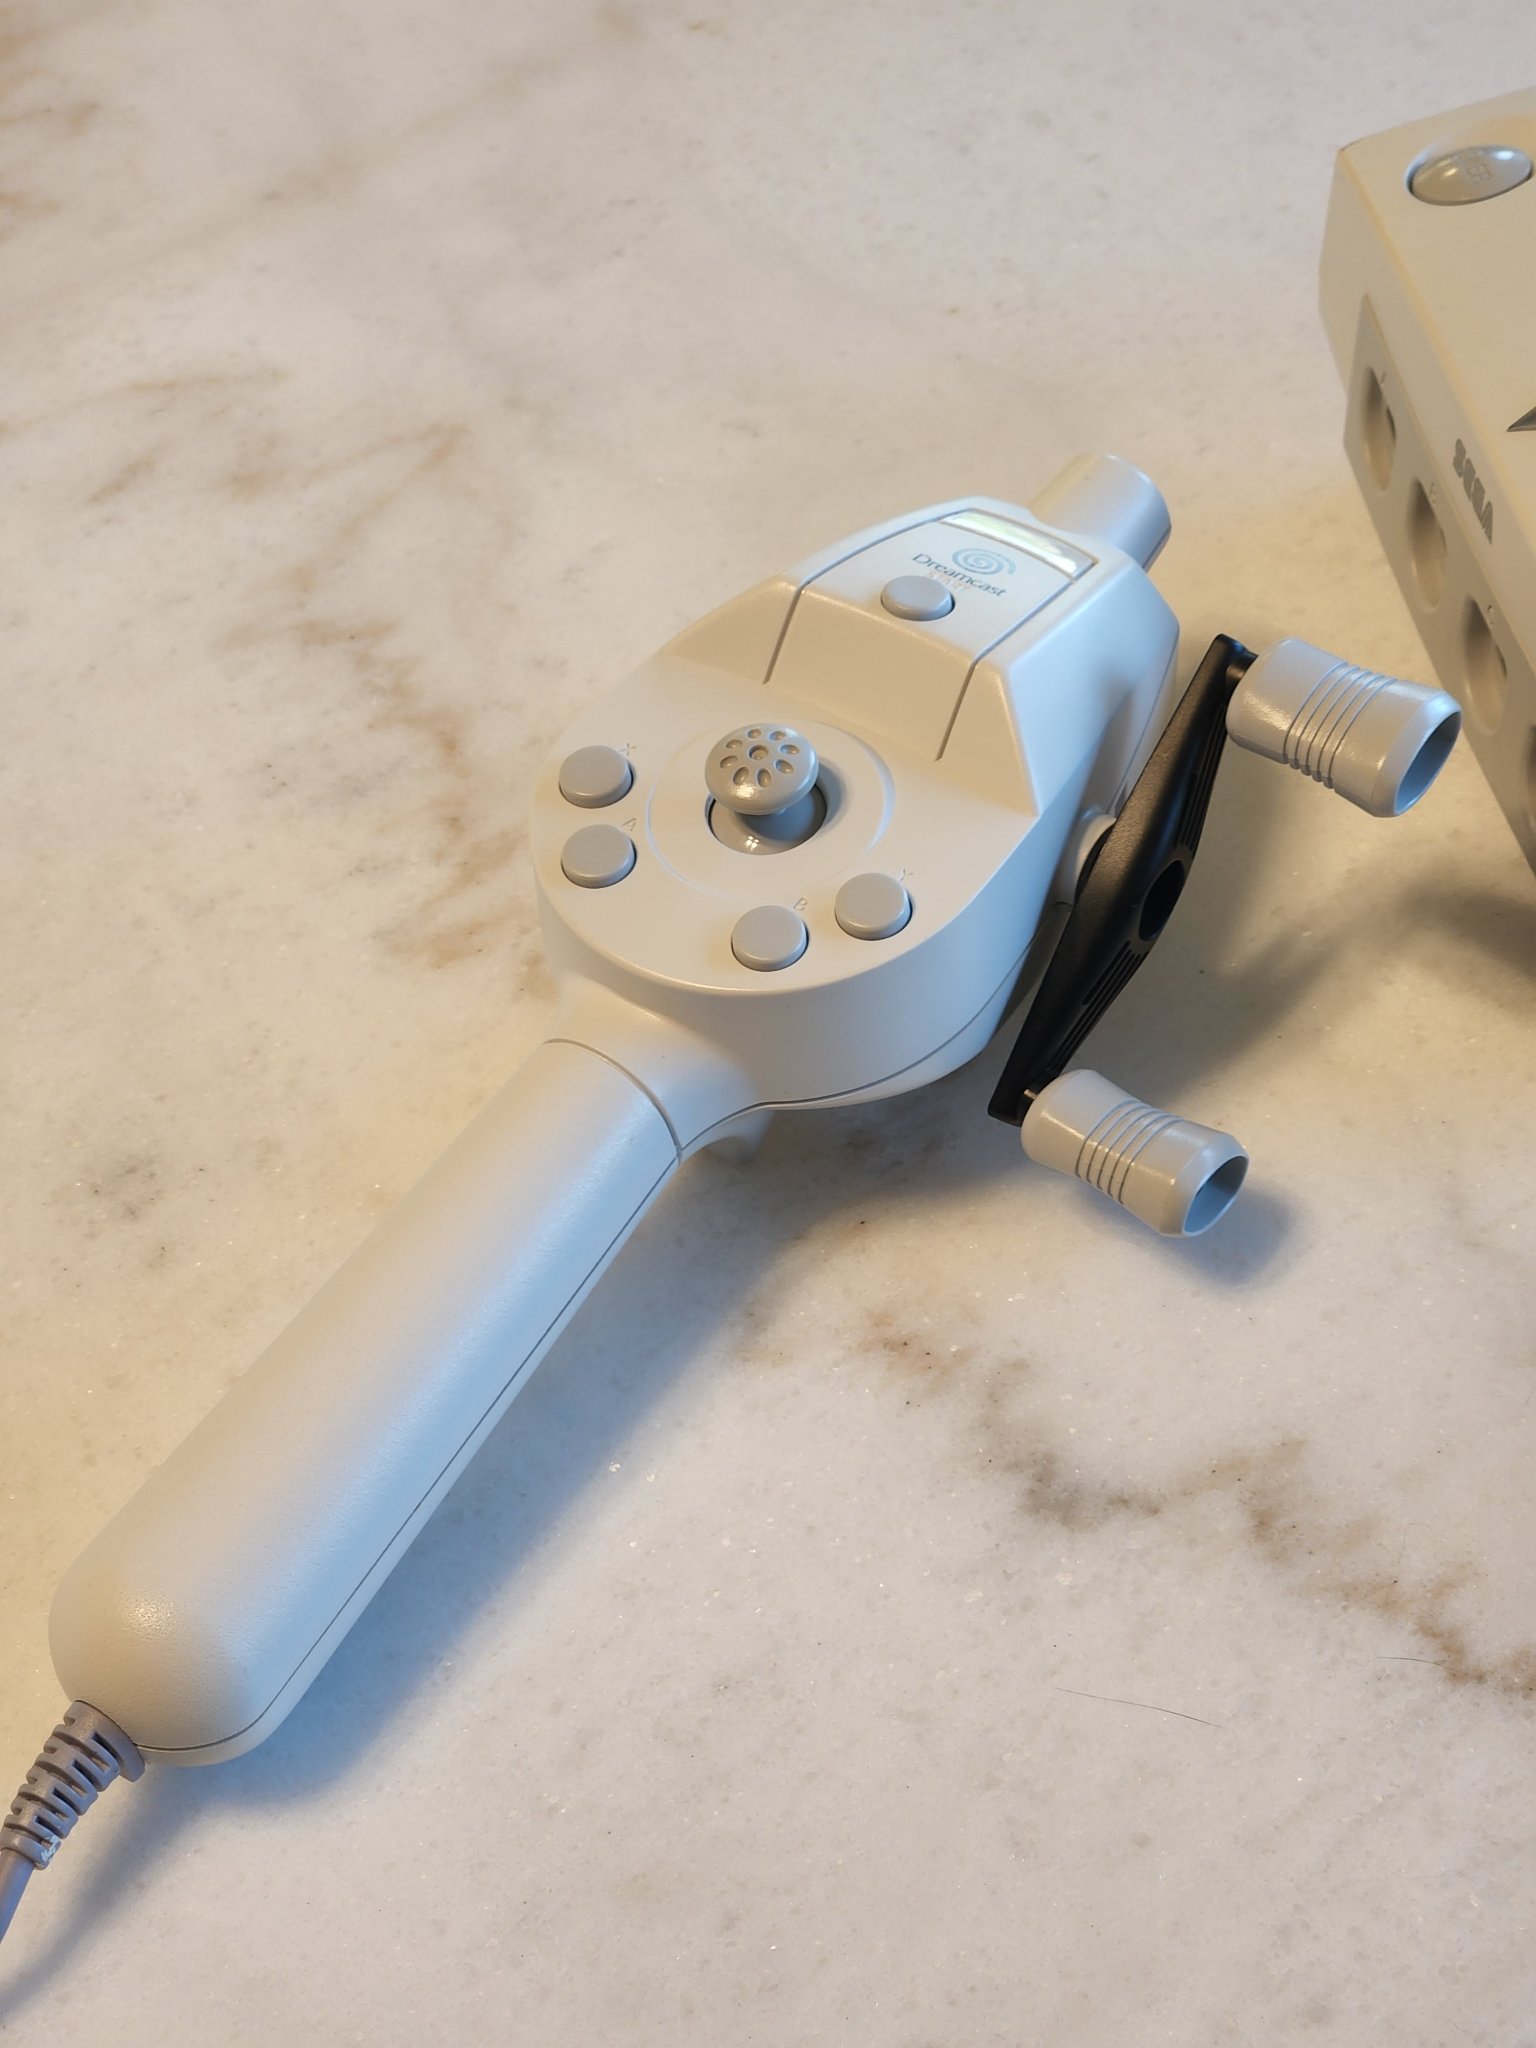 SmokeMonster on X: The @SEGA Dreamcast fishing reel is